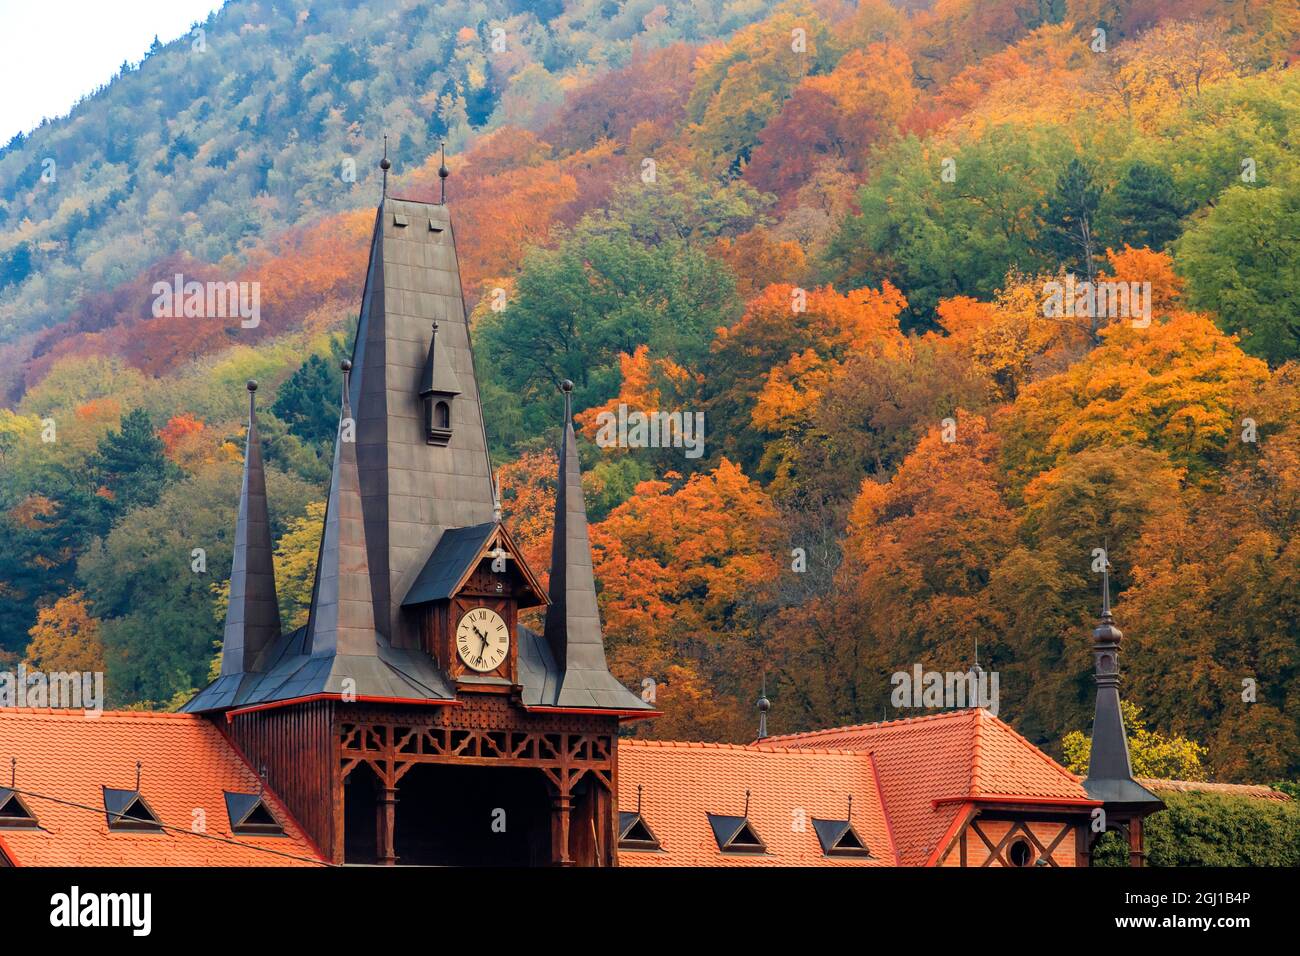 Europe, Romania, Brasov. Poarta Schei district. Olimpia Restaurant near George Street. Clock Tower, spires. Stock Photo